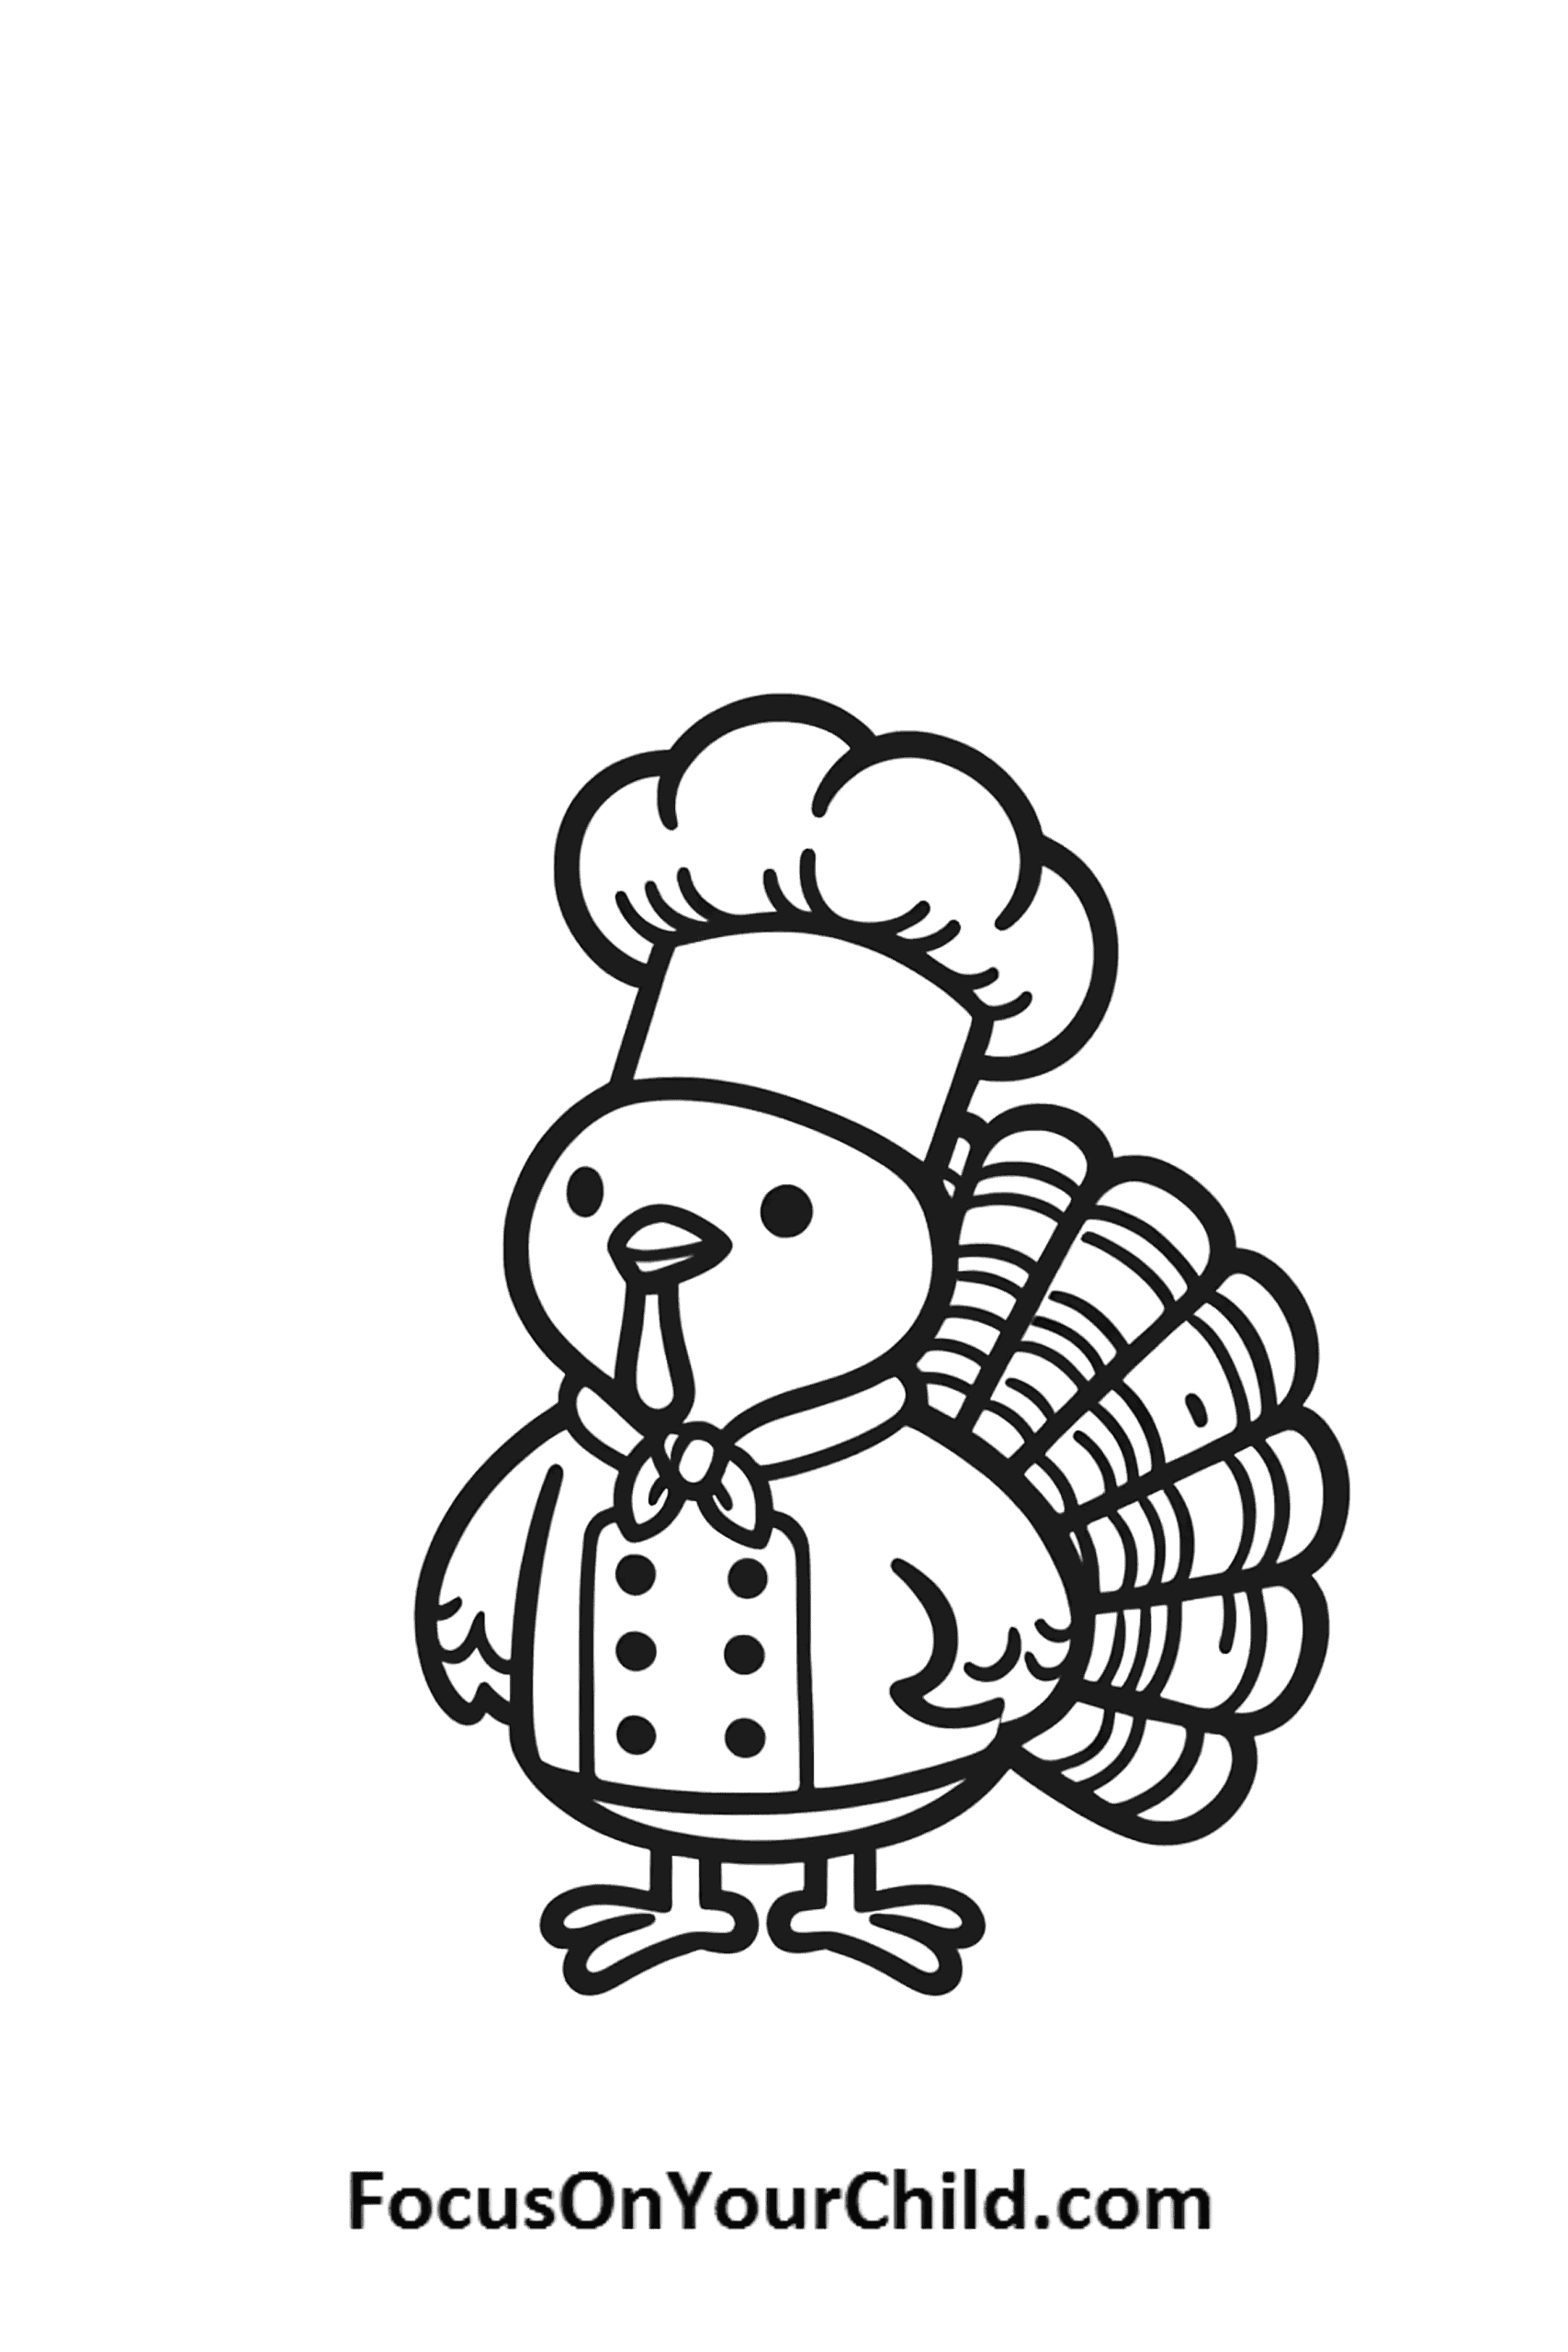 Whimsical cartoon turkey chef for FocusOnYourChild.com.